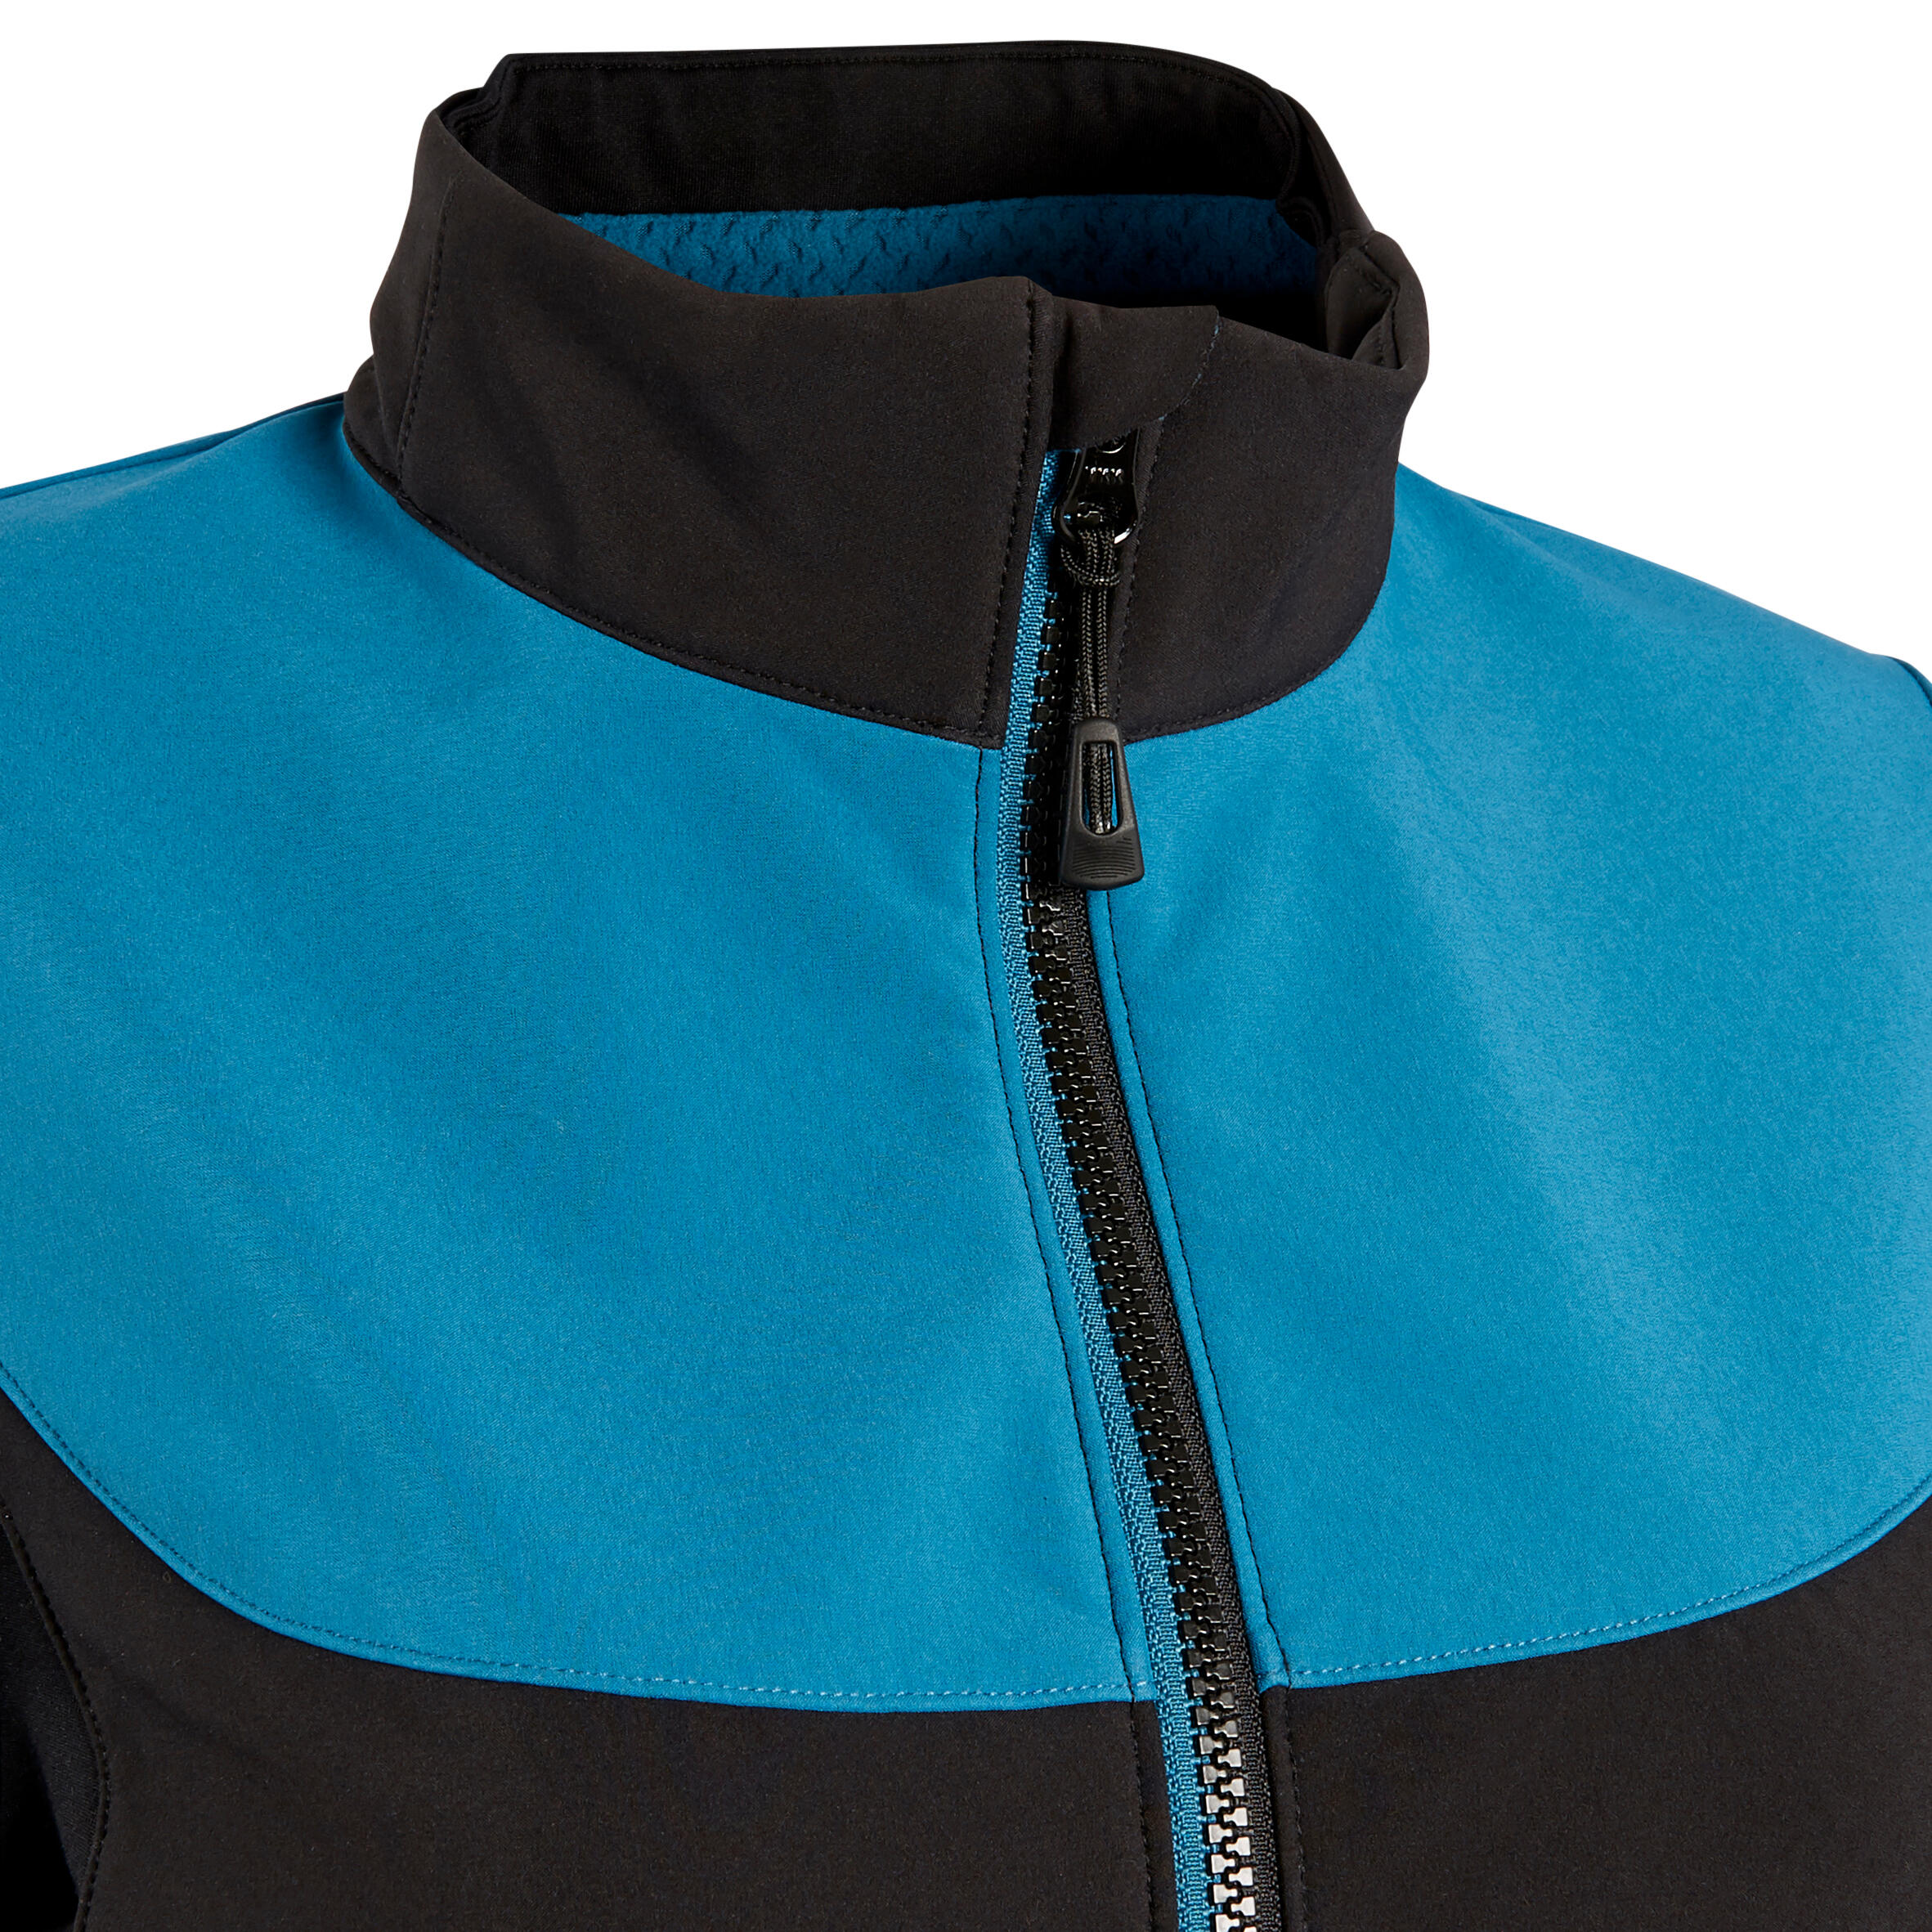 Women's Winter Mountain Bike Jacket - Turquoise/Black 9/19